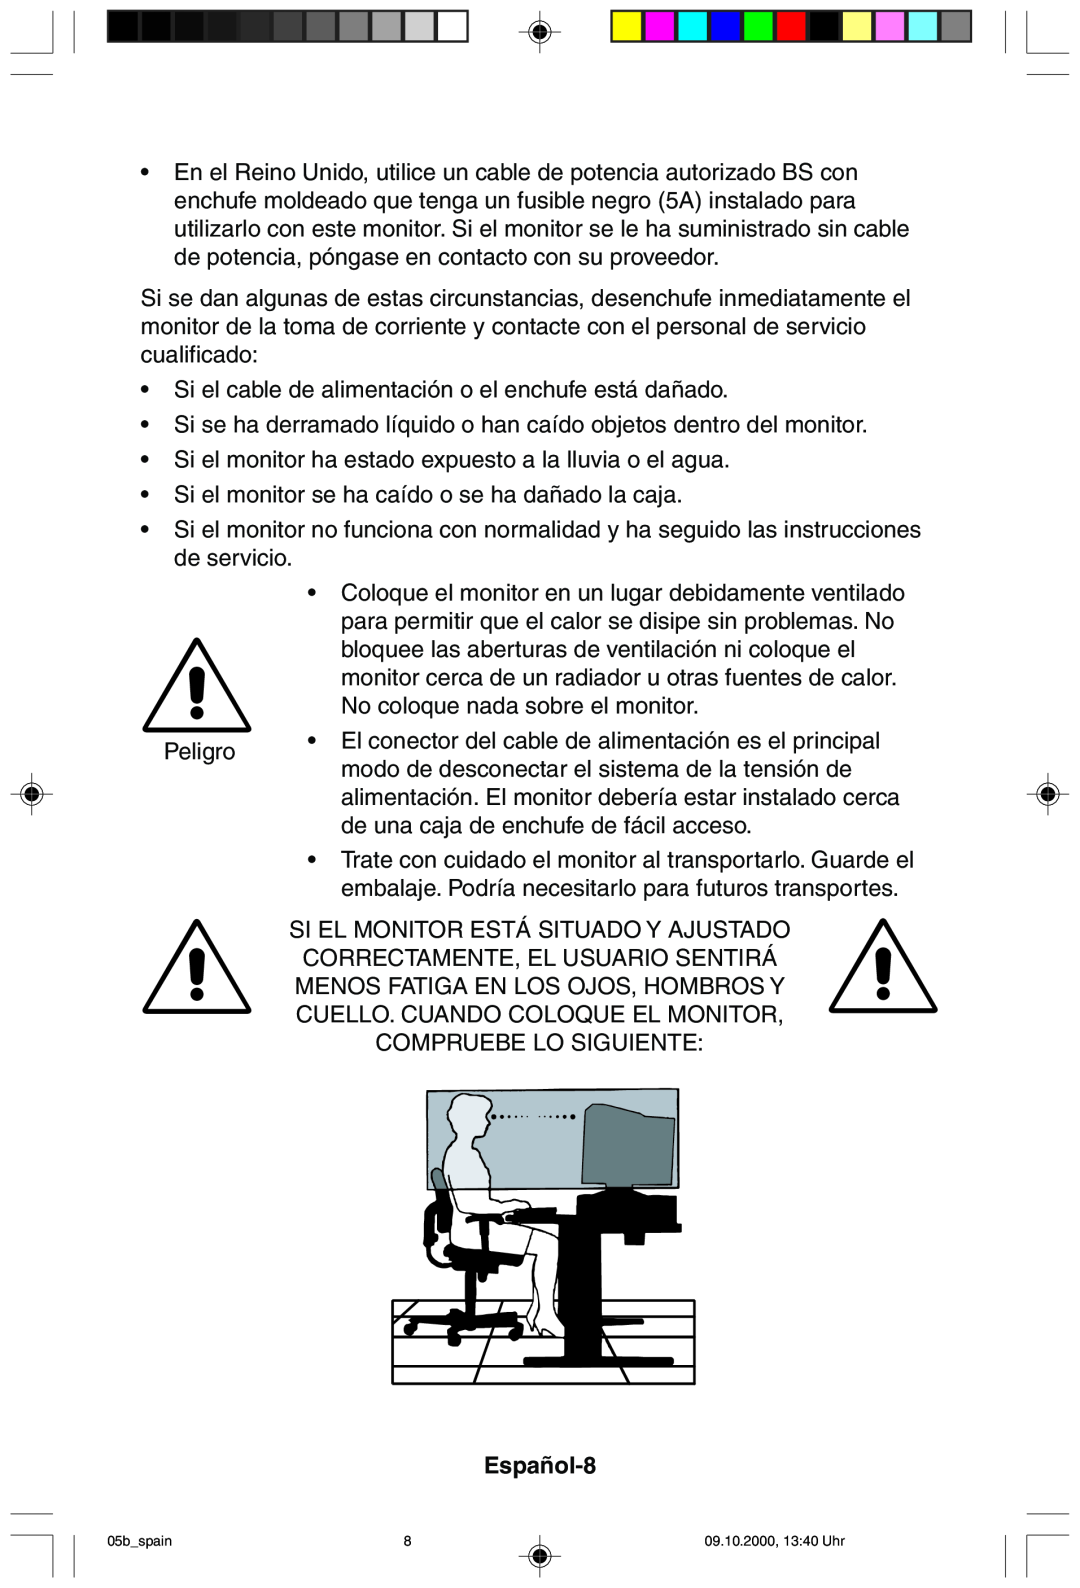 NEC 95F user manual Español-8 